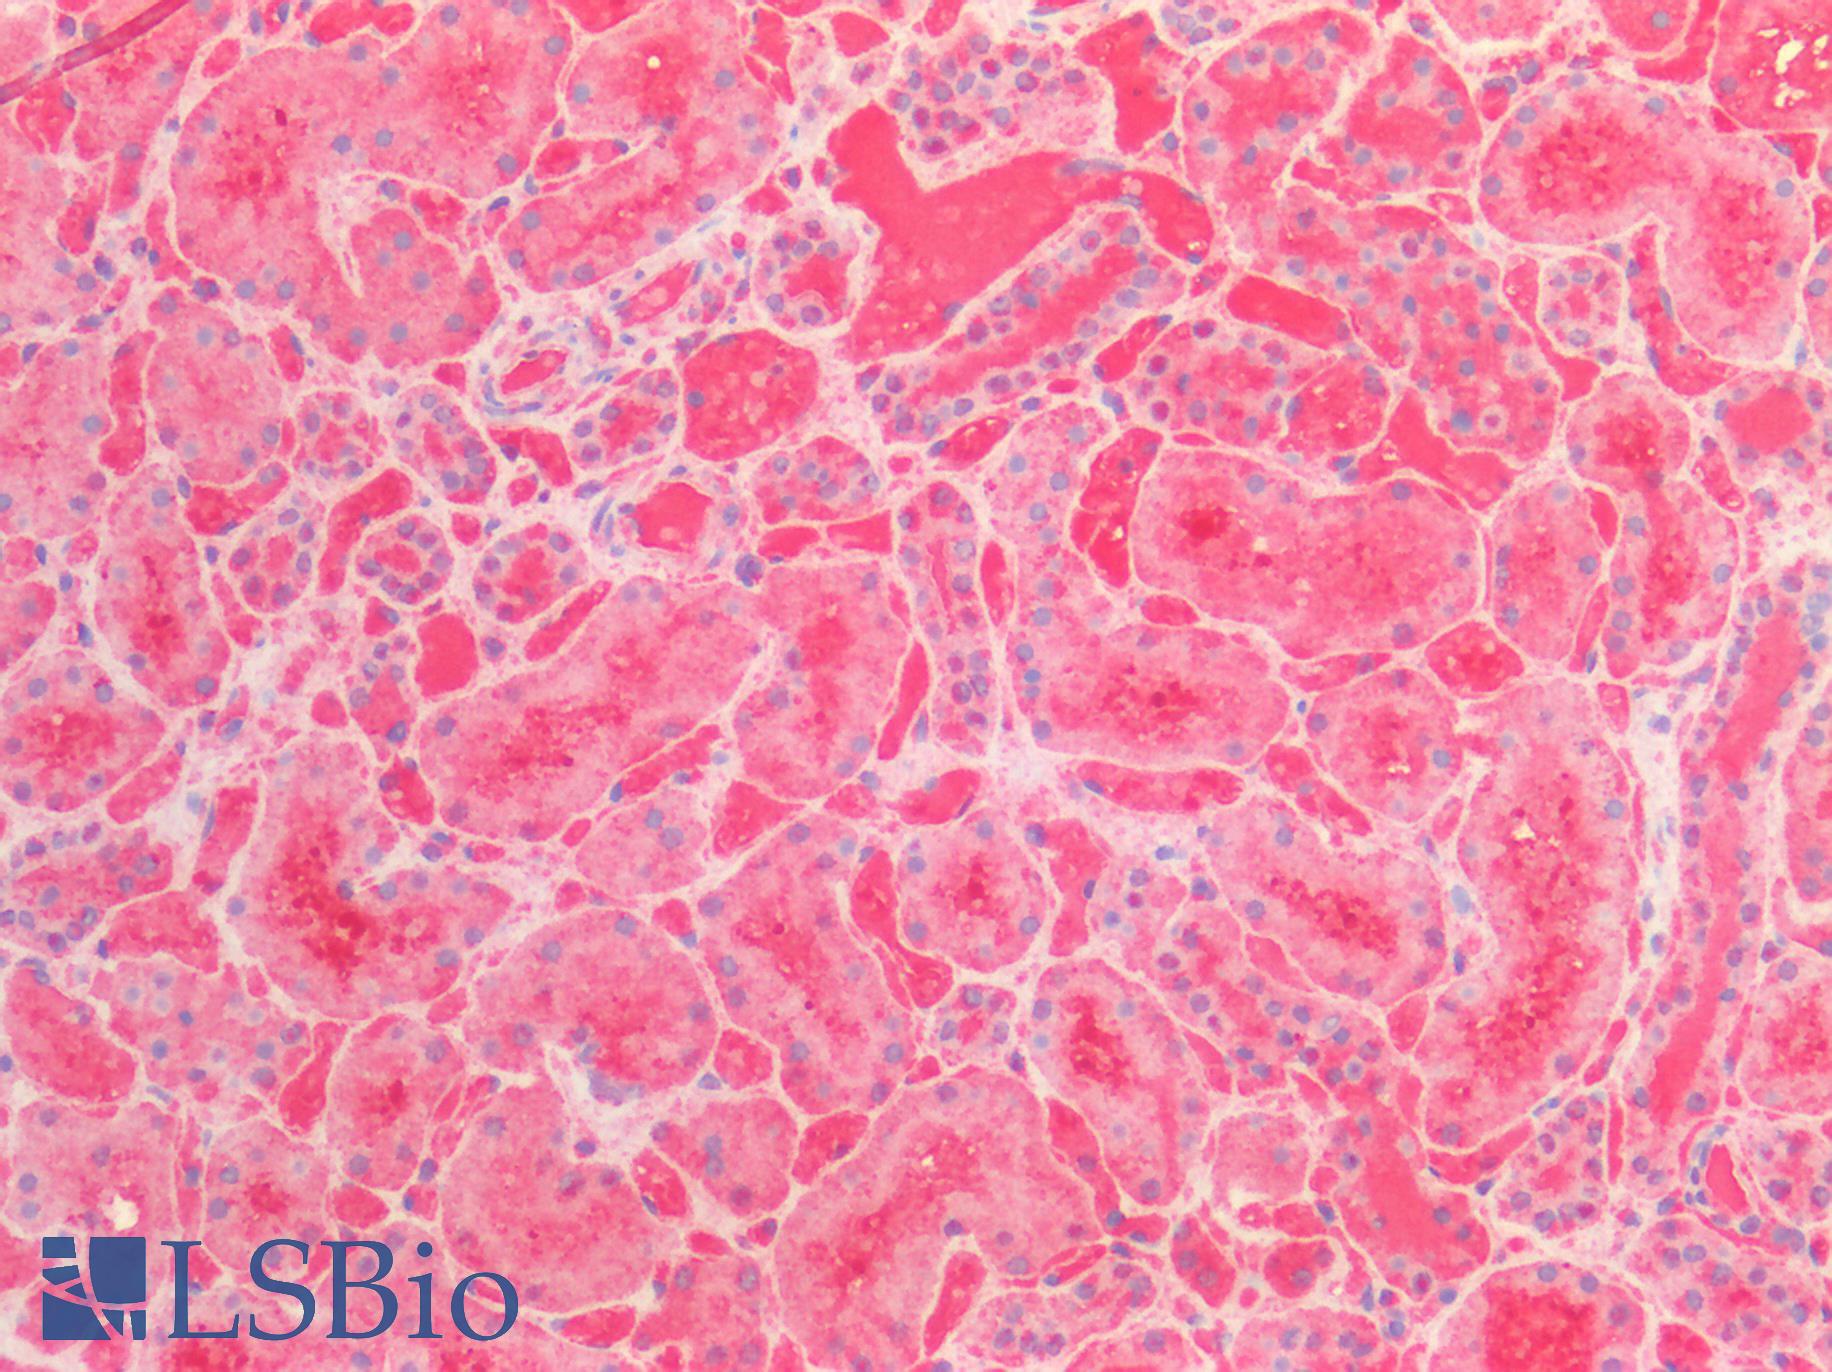 ENO1 / Alpha Enolase Antibody - Human Kidney: Formalin-Fixed, Paraffin-Embedded (FFPE)